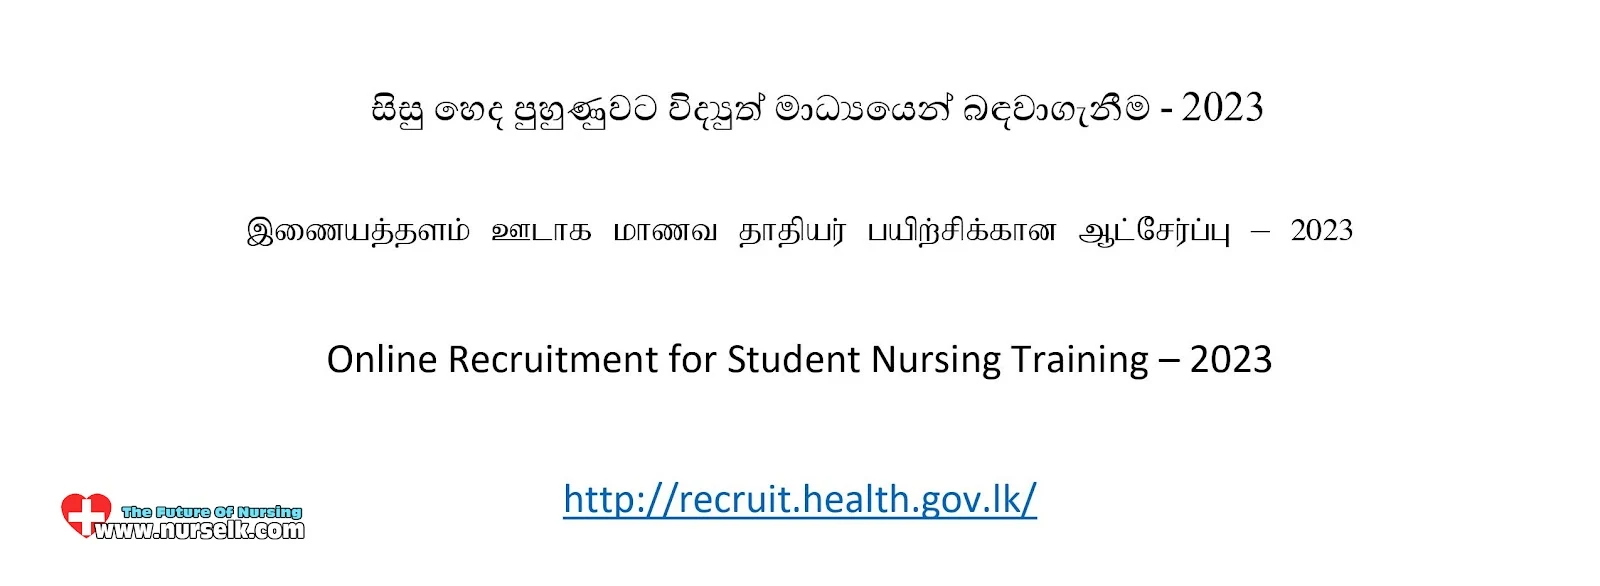 Recruitment for the Student Nursing Training – 2023